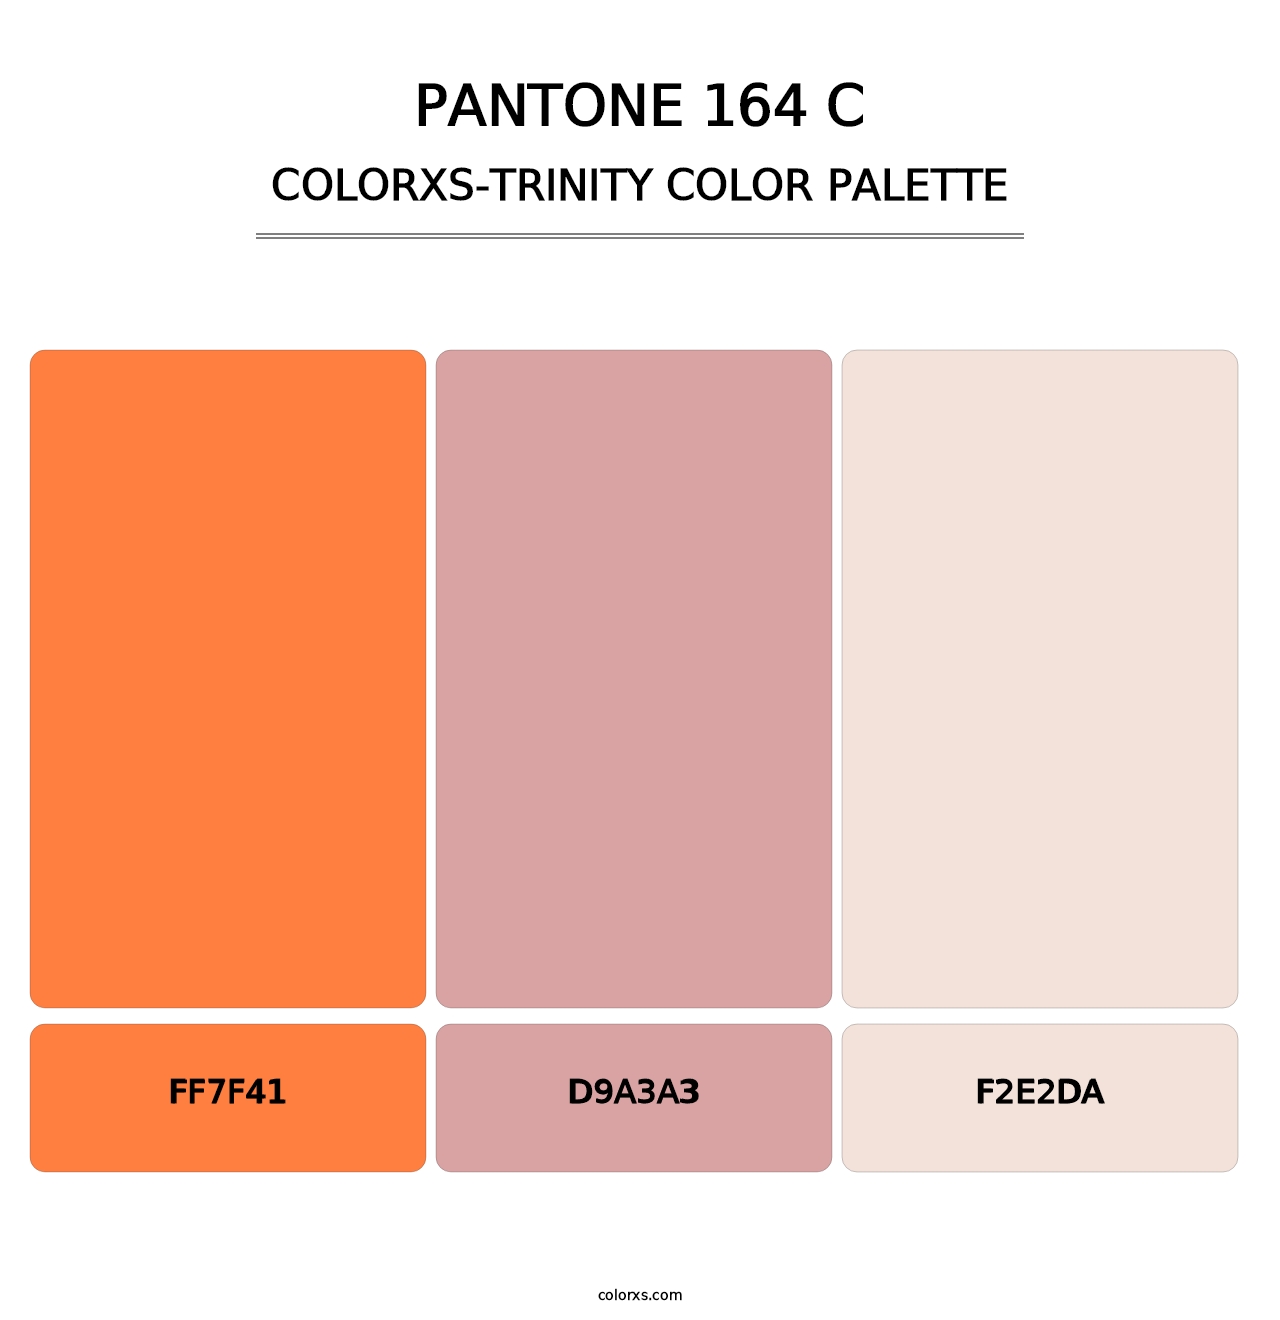 PANTONE 164 C - Colorxs Trinity Palette